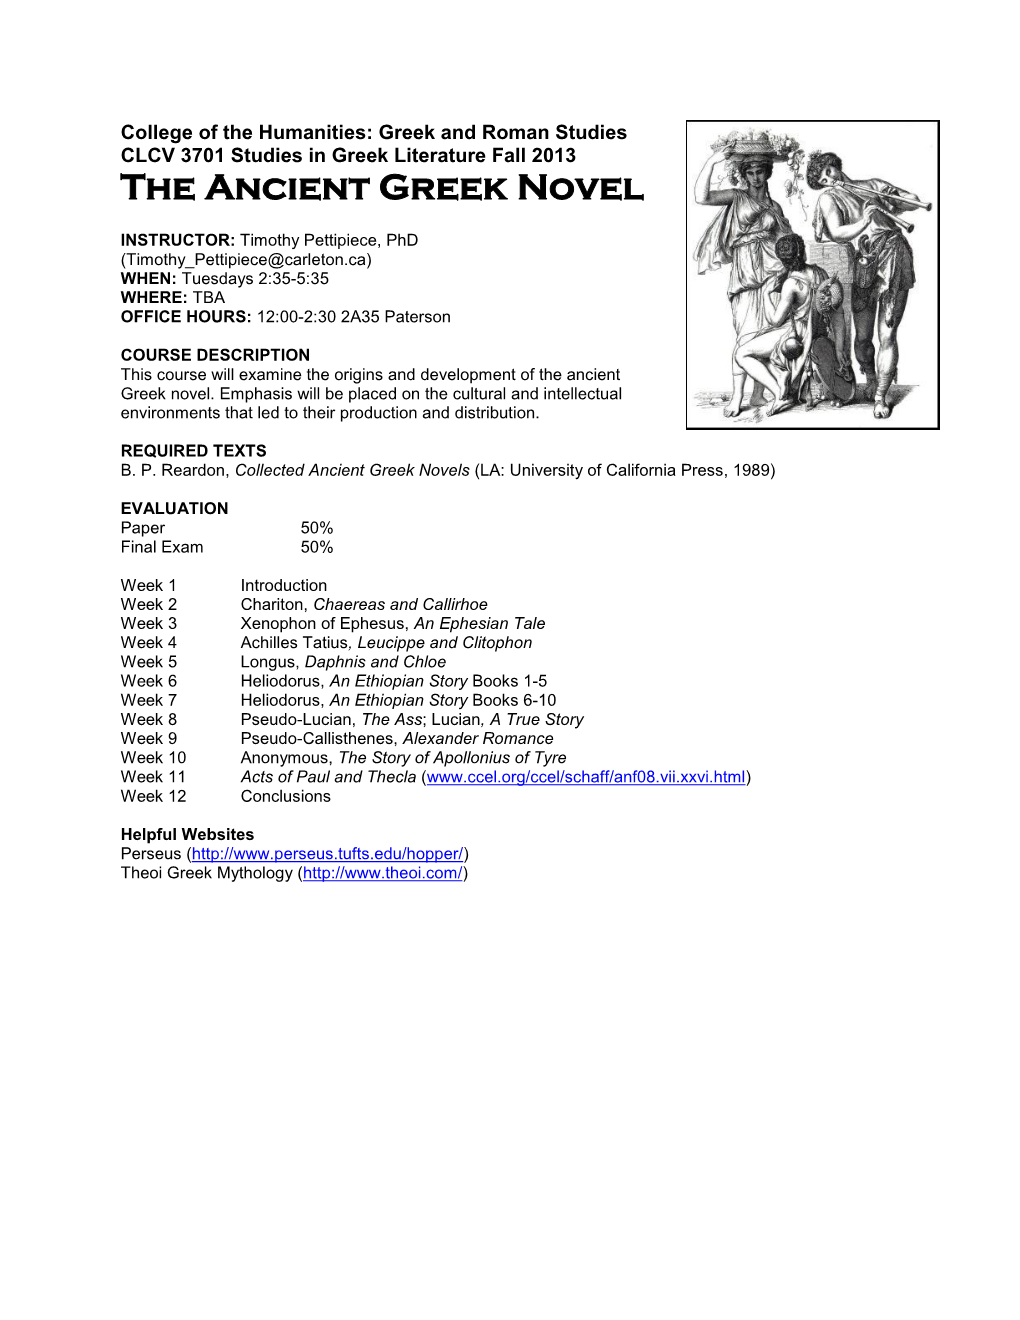 The Ancient Greek Novel